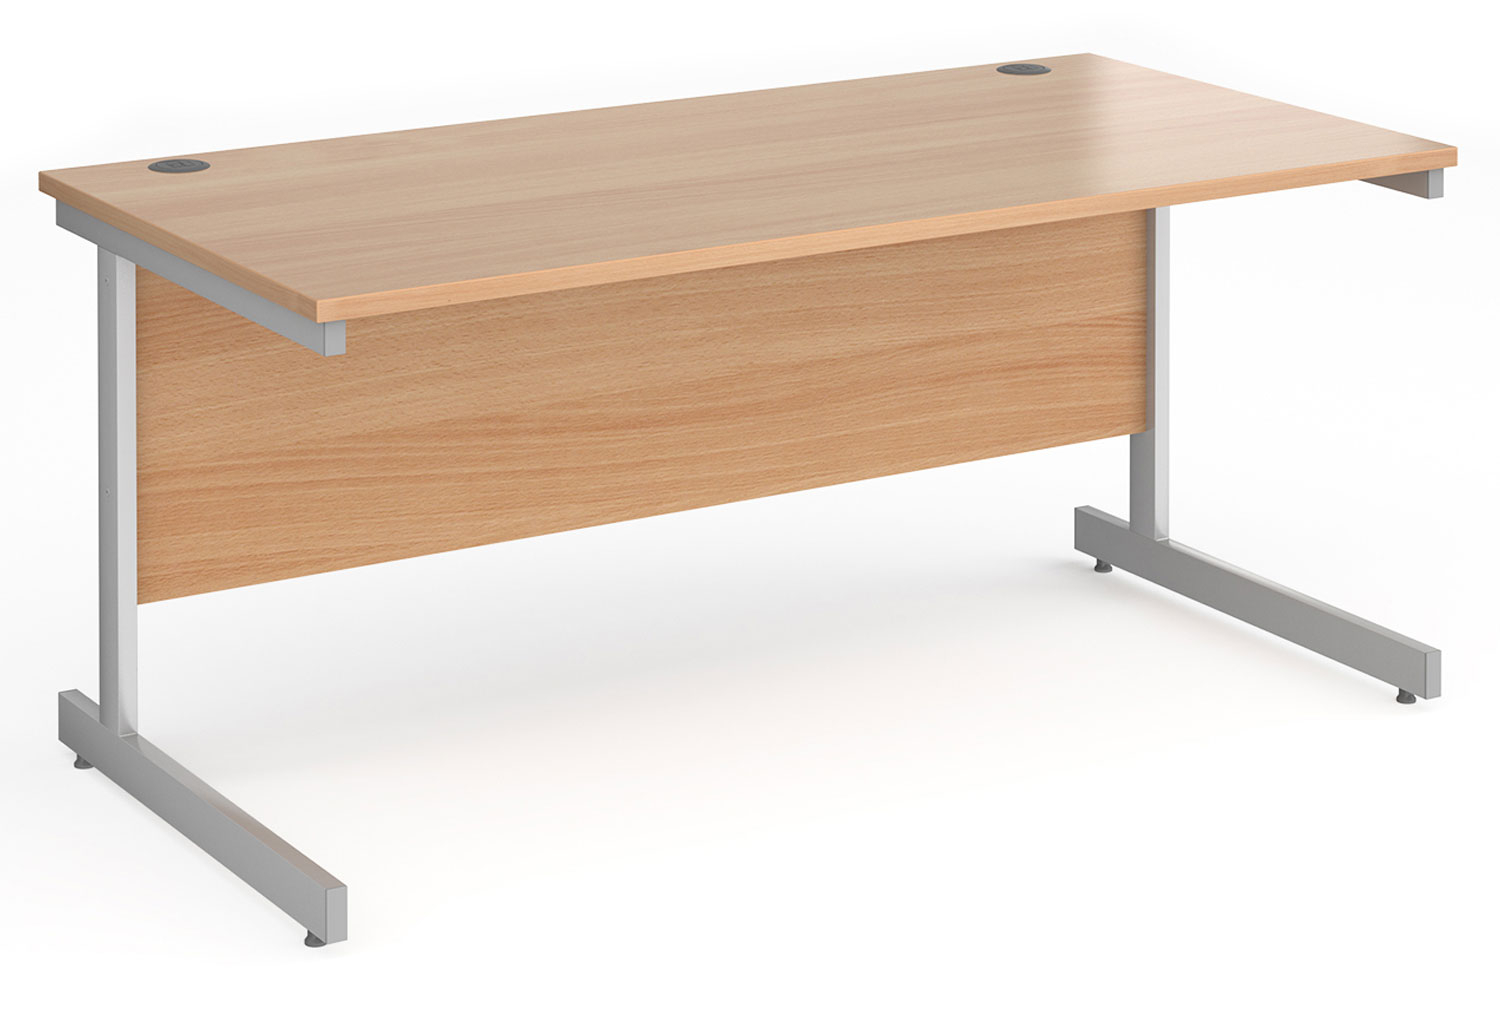 Value Line Classic+ Rectangular C-Leg Office Desk (Silver Leg), 160wx80dx73h (cm), Beech, Fully Installed